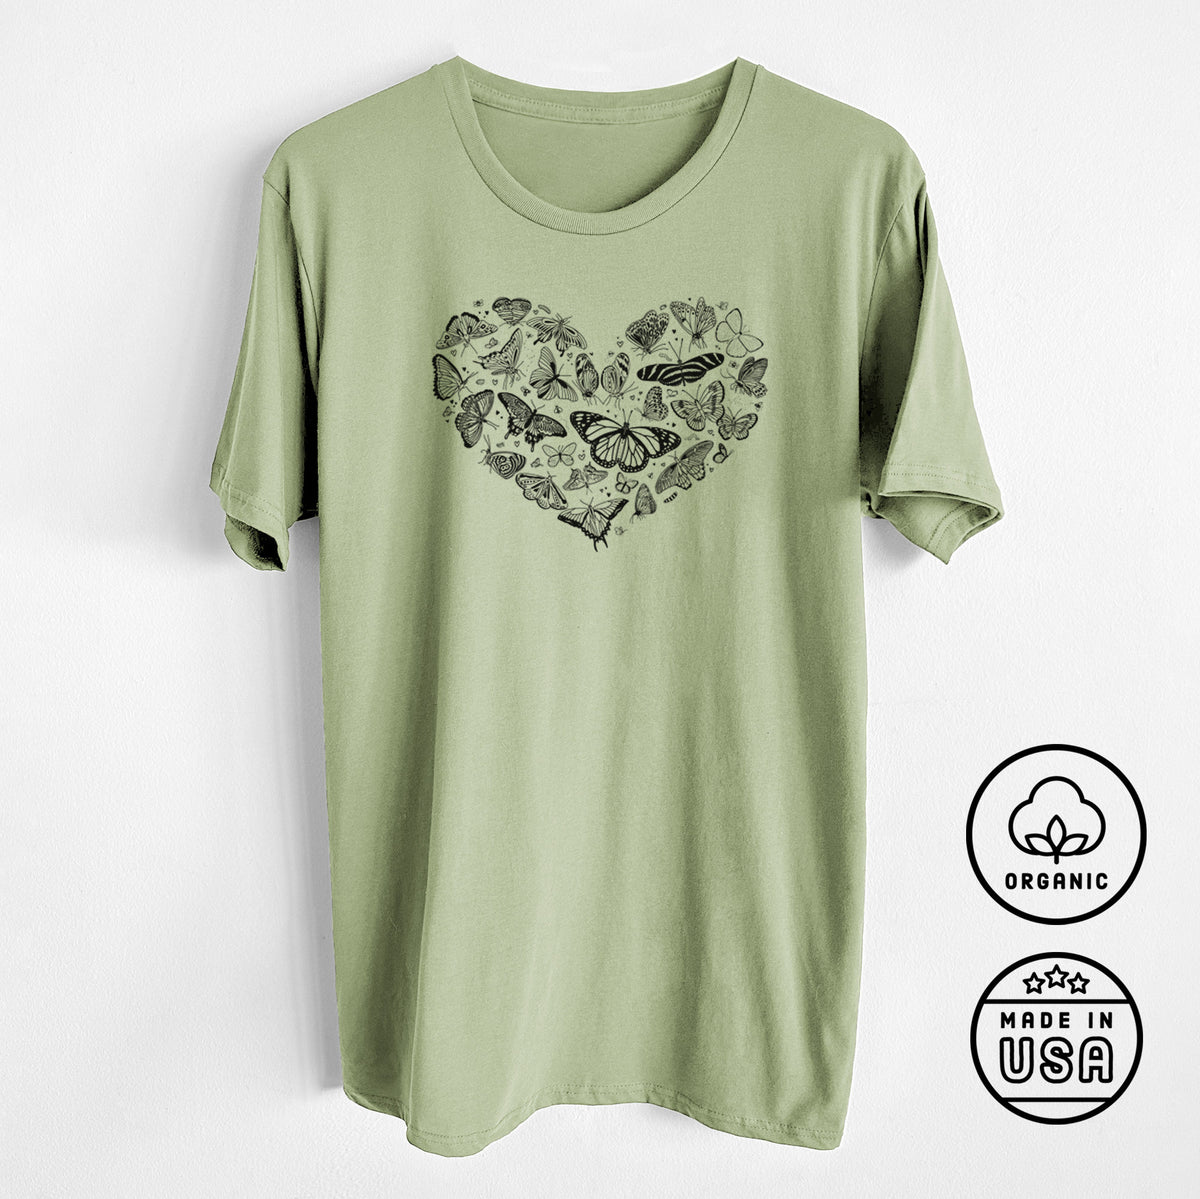 Heart Full of Butterflies - Unisex Crewneck - Made in USA - 100% Organic Cotton